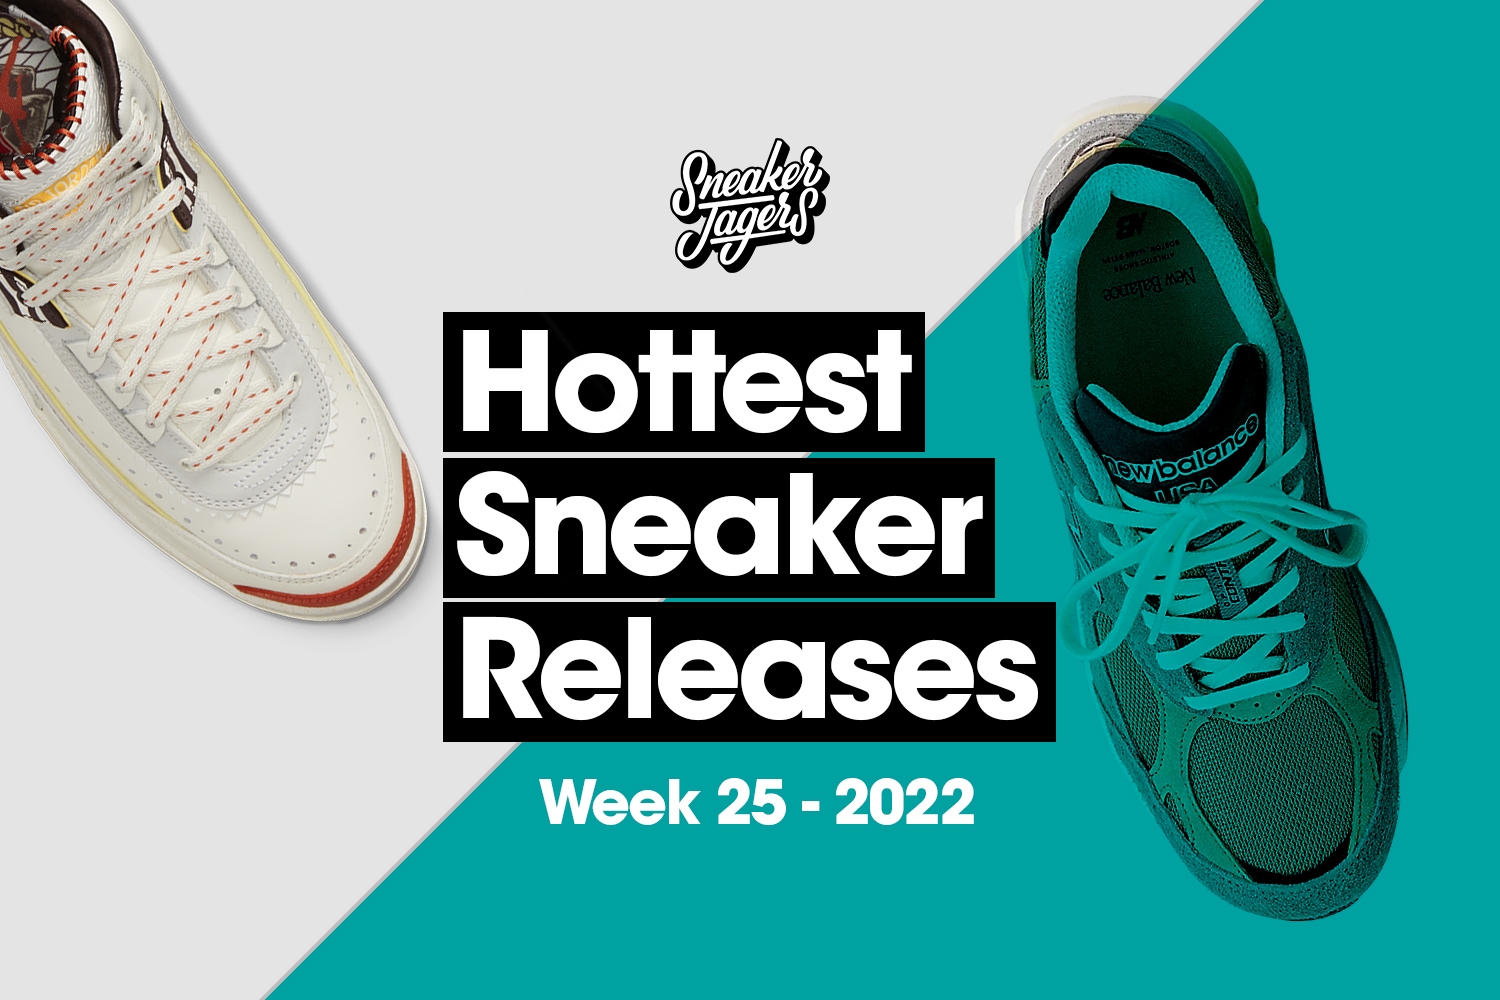 Hottest Sneaker Releases - Week 25